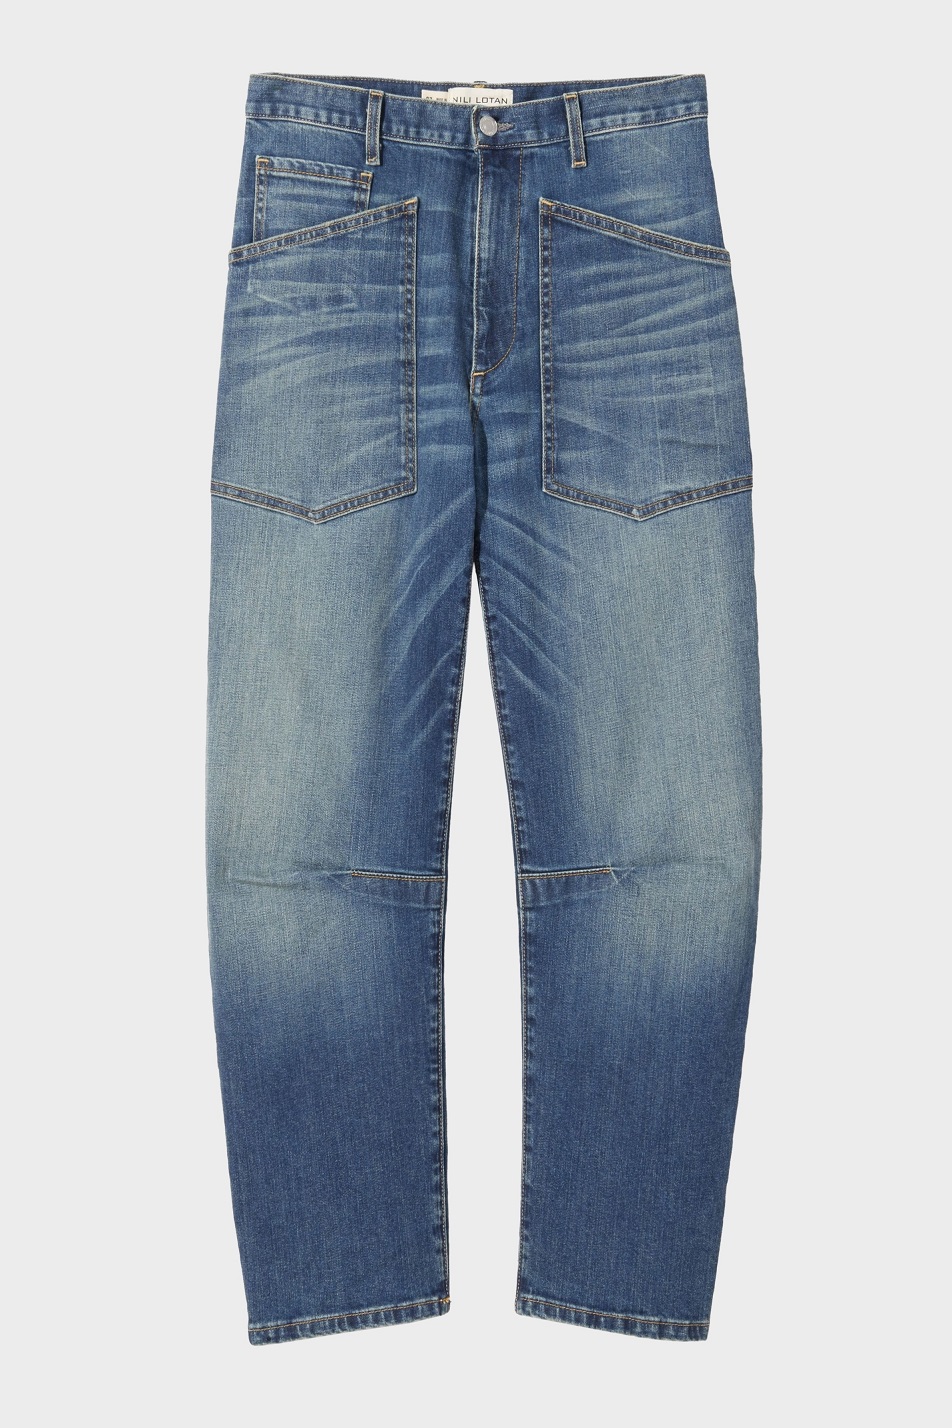 NILI LOTAN Shon Jeans in Classic Wash